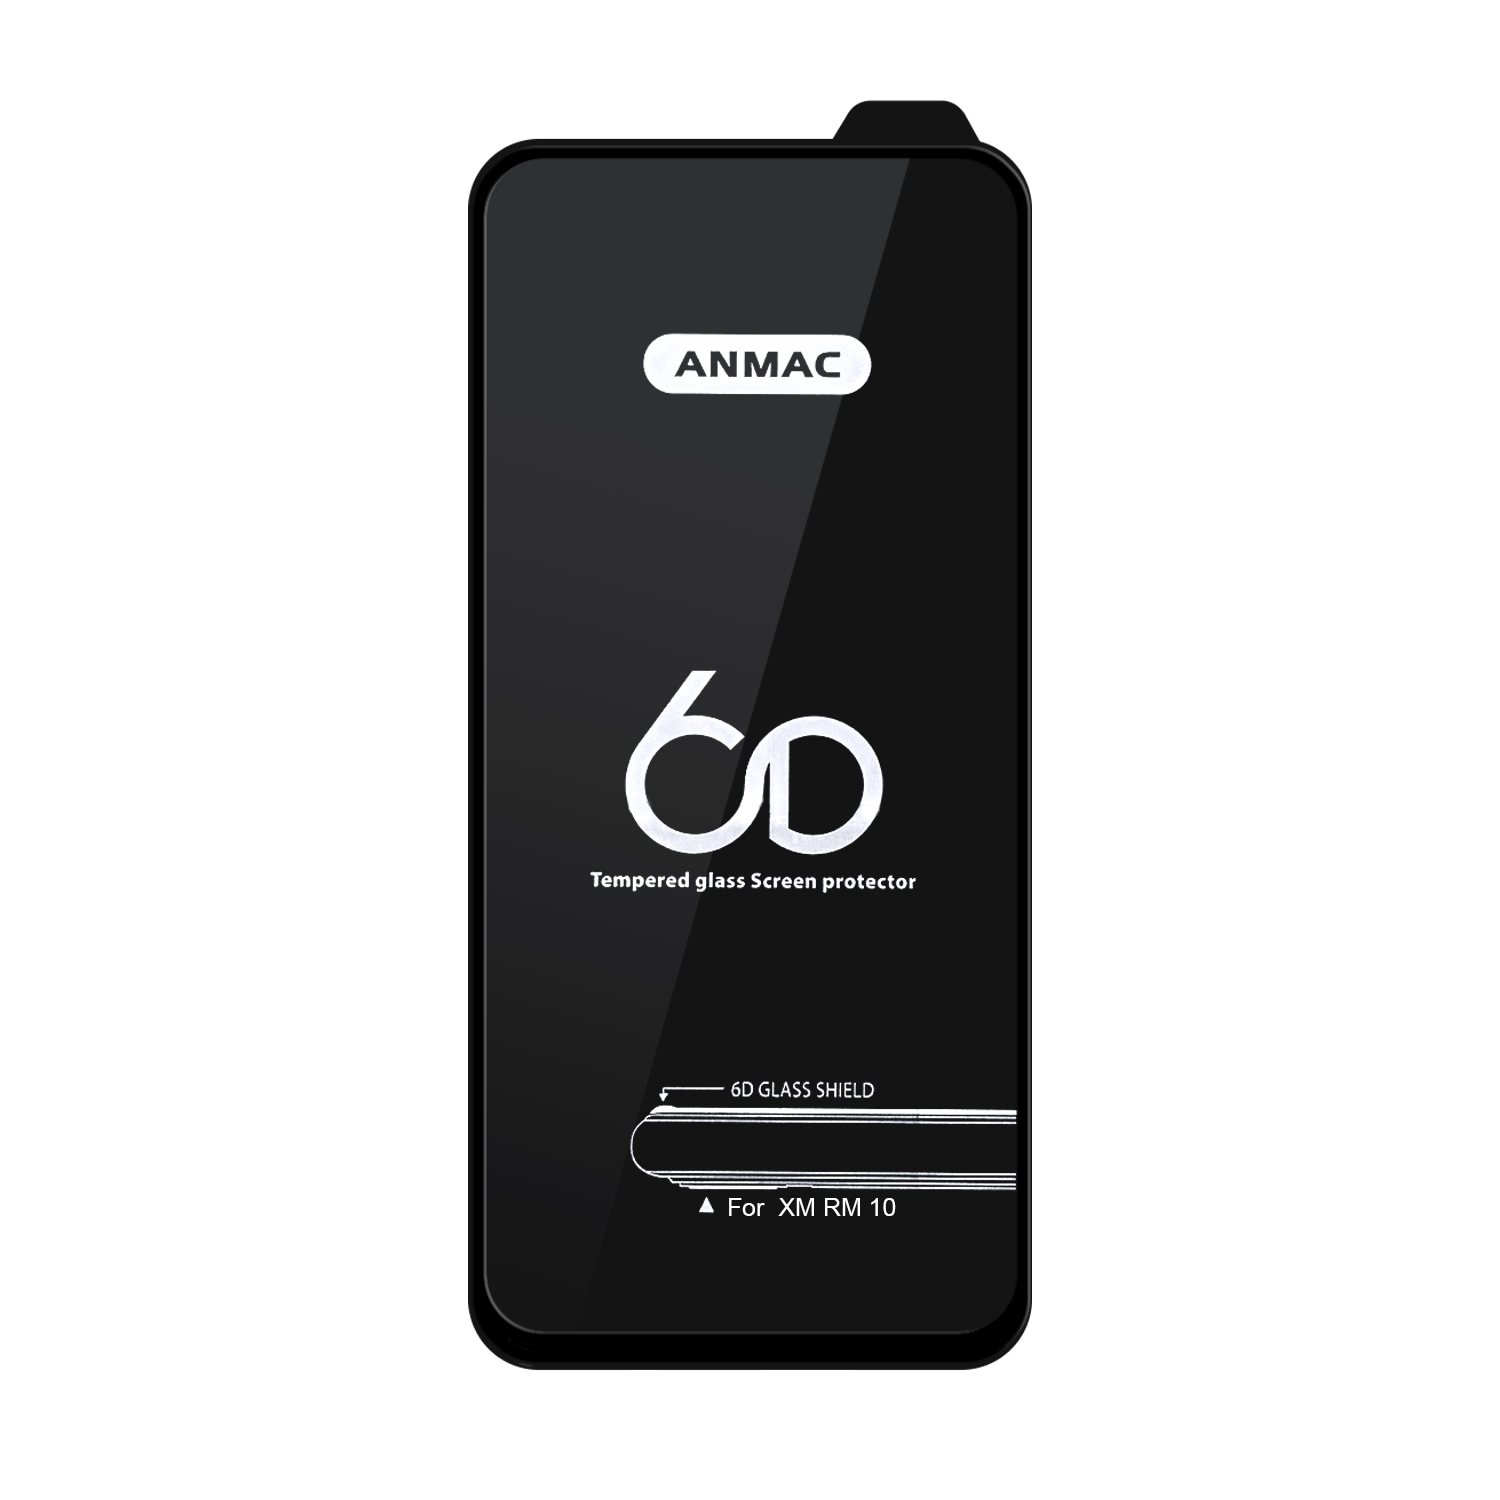 Защитное стекло XM Redmi 10 Anmac 6D Black без упаковки Арт.1137287